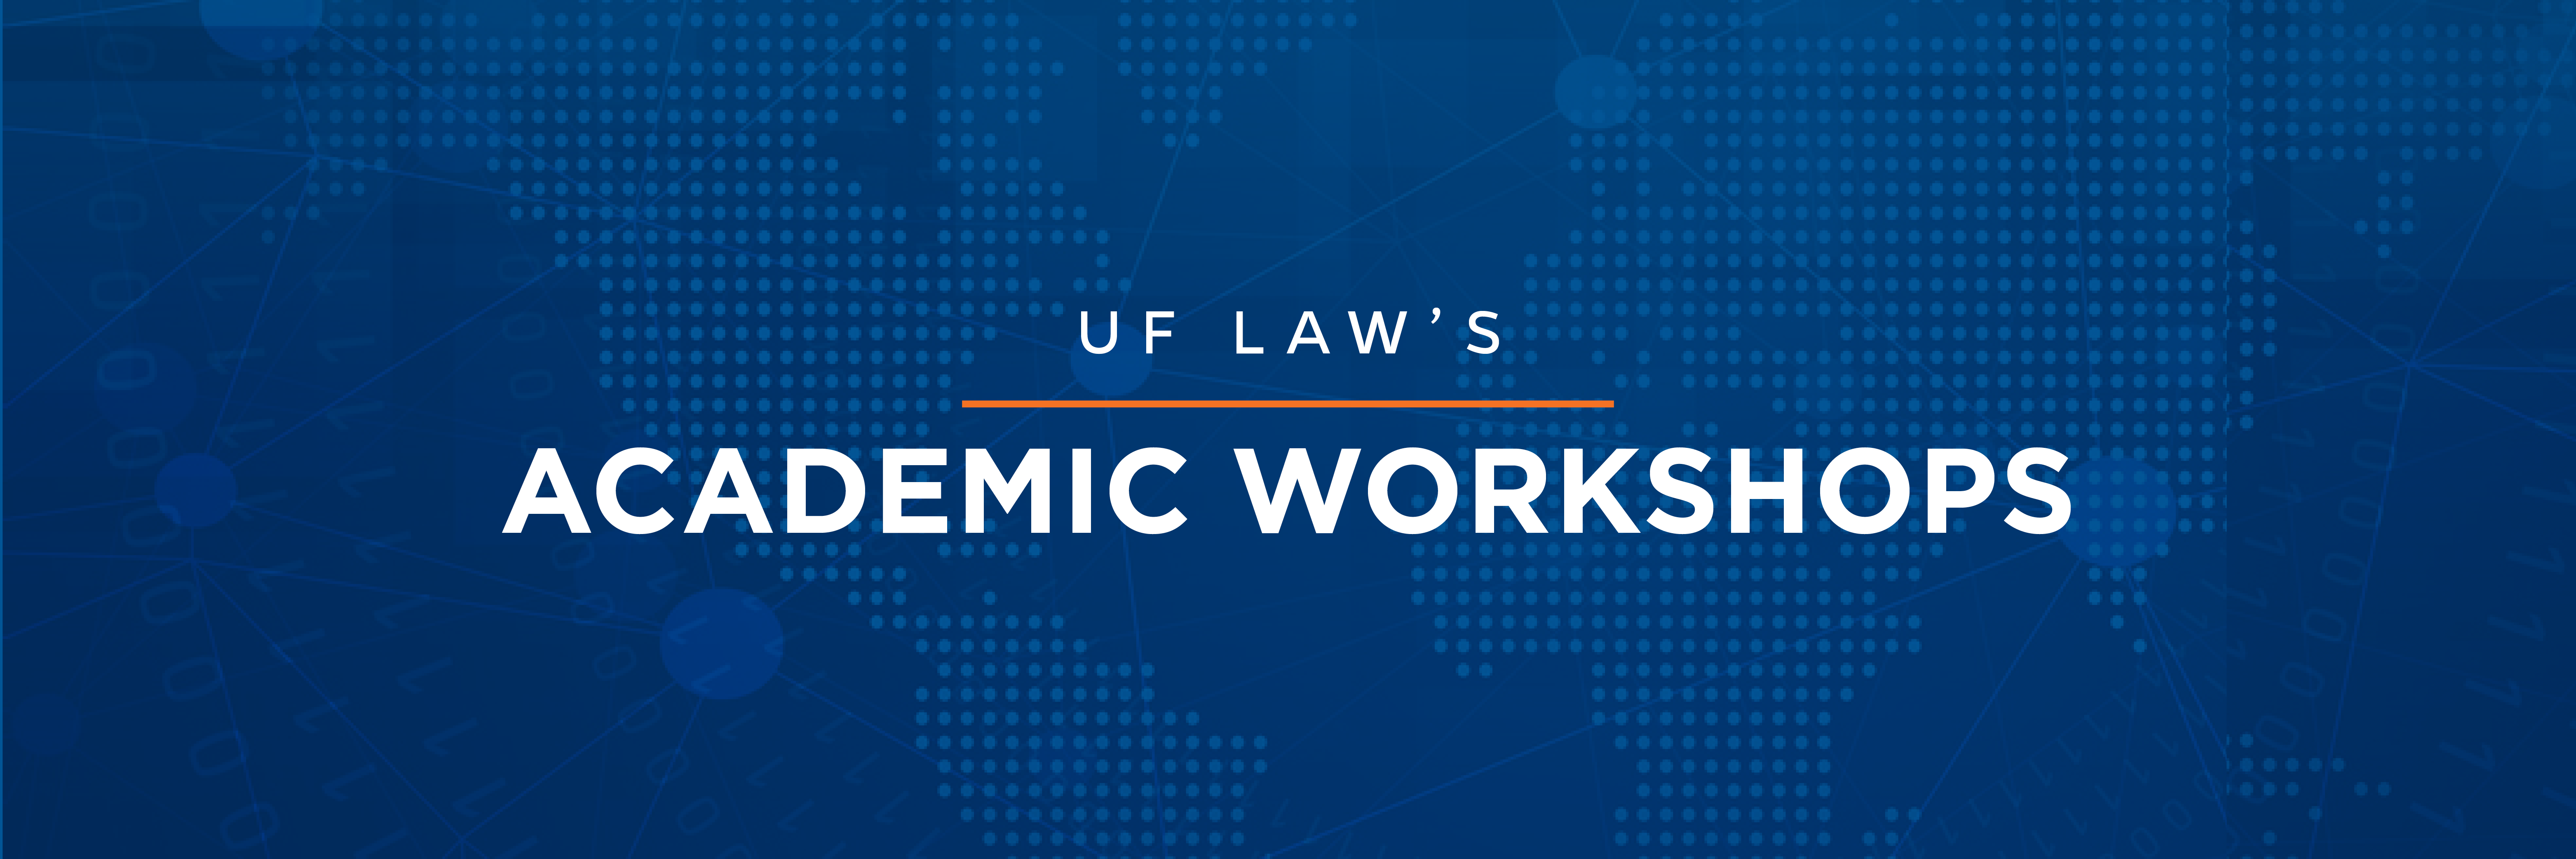 UF Law's Academic Workshops